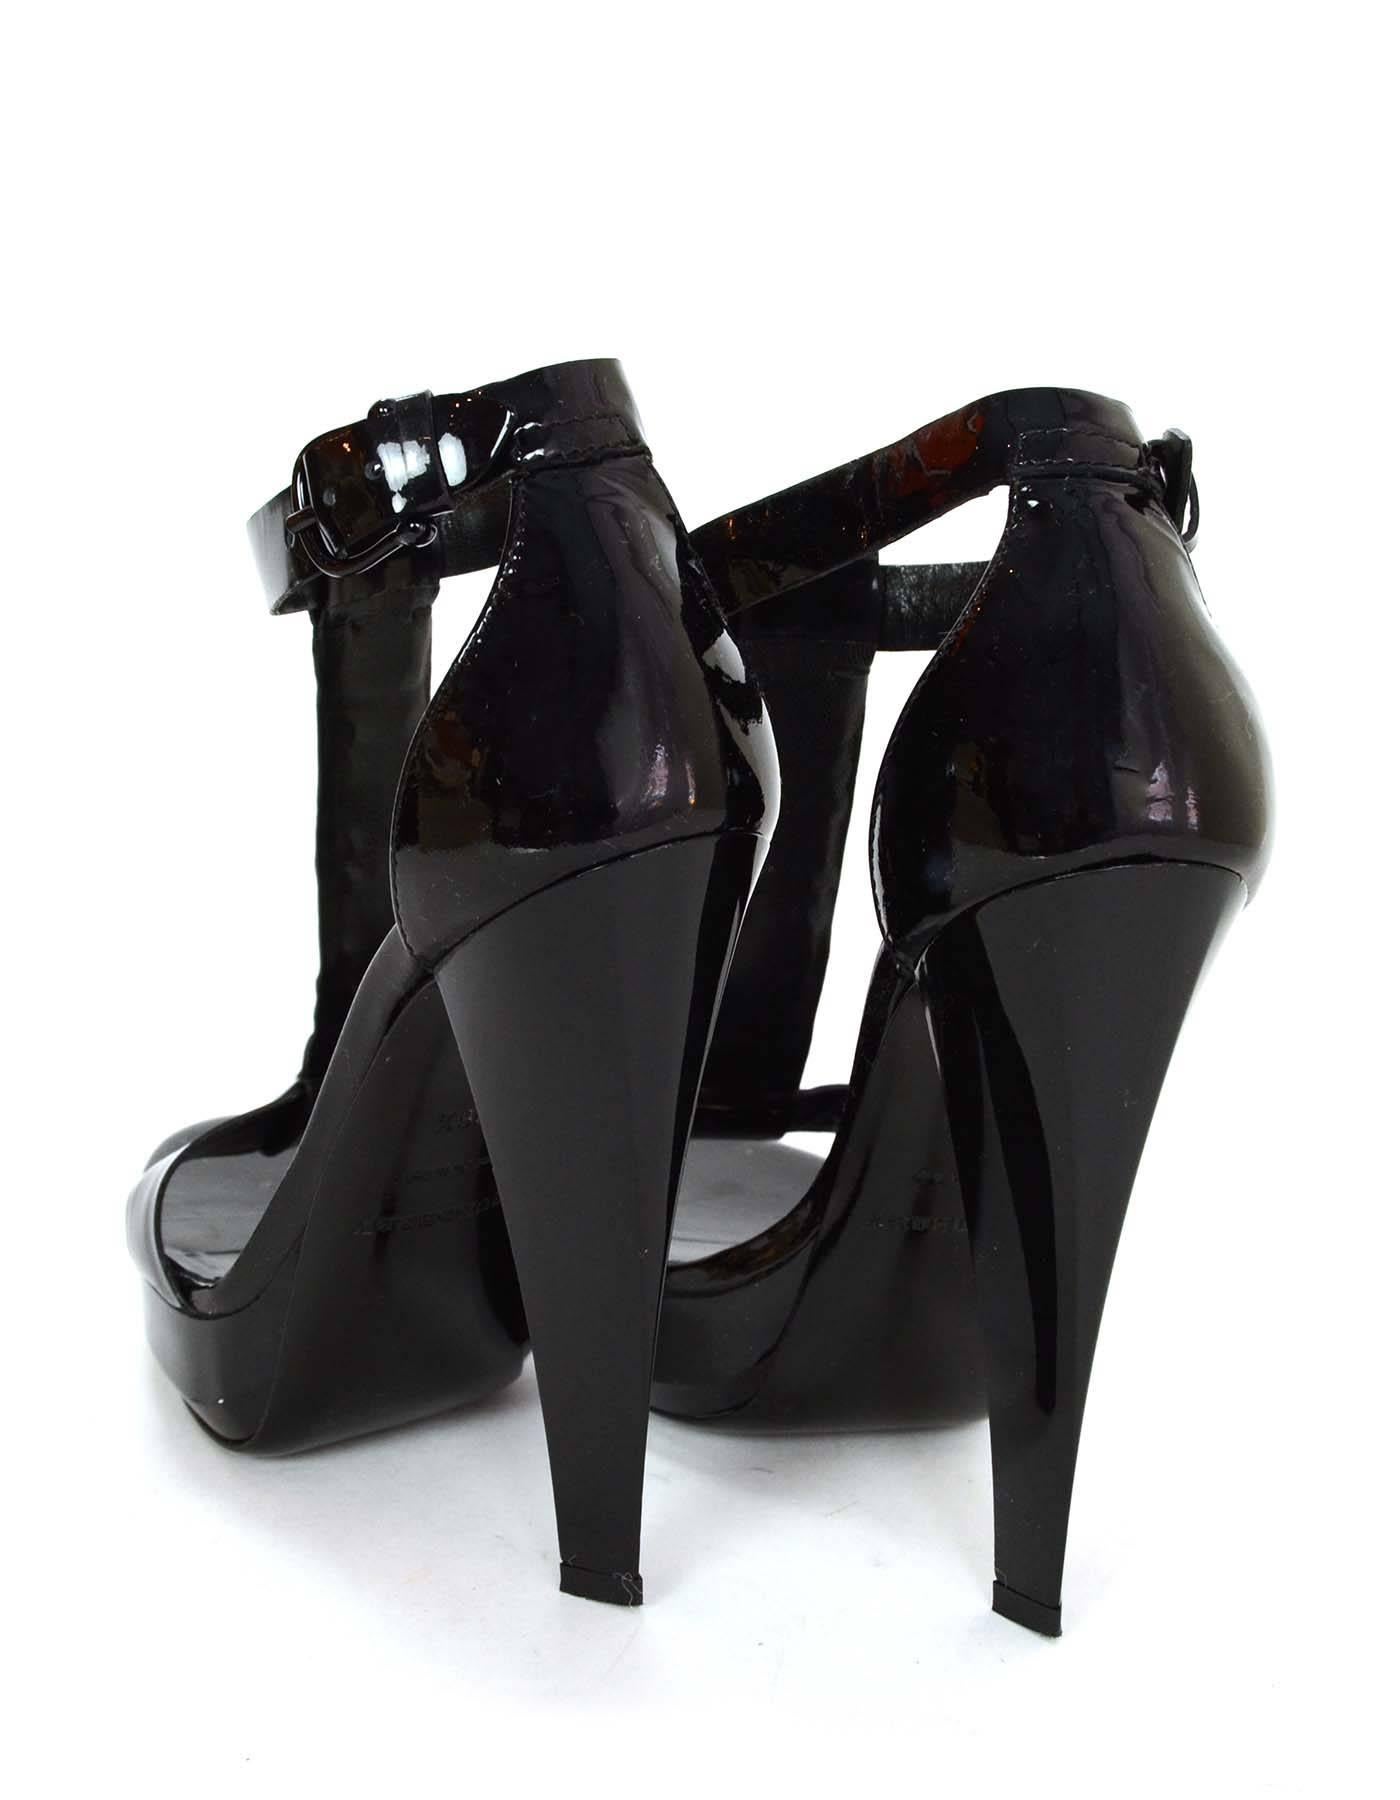 Burberry Black Patent Leather and Nova Plaid Sandals Sz 36.5 rt. $650 1